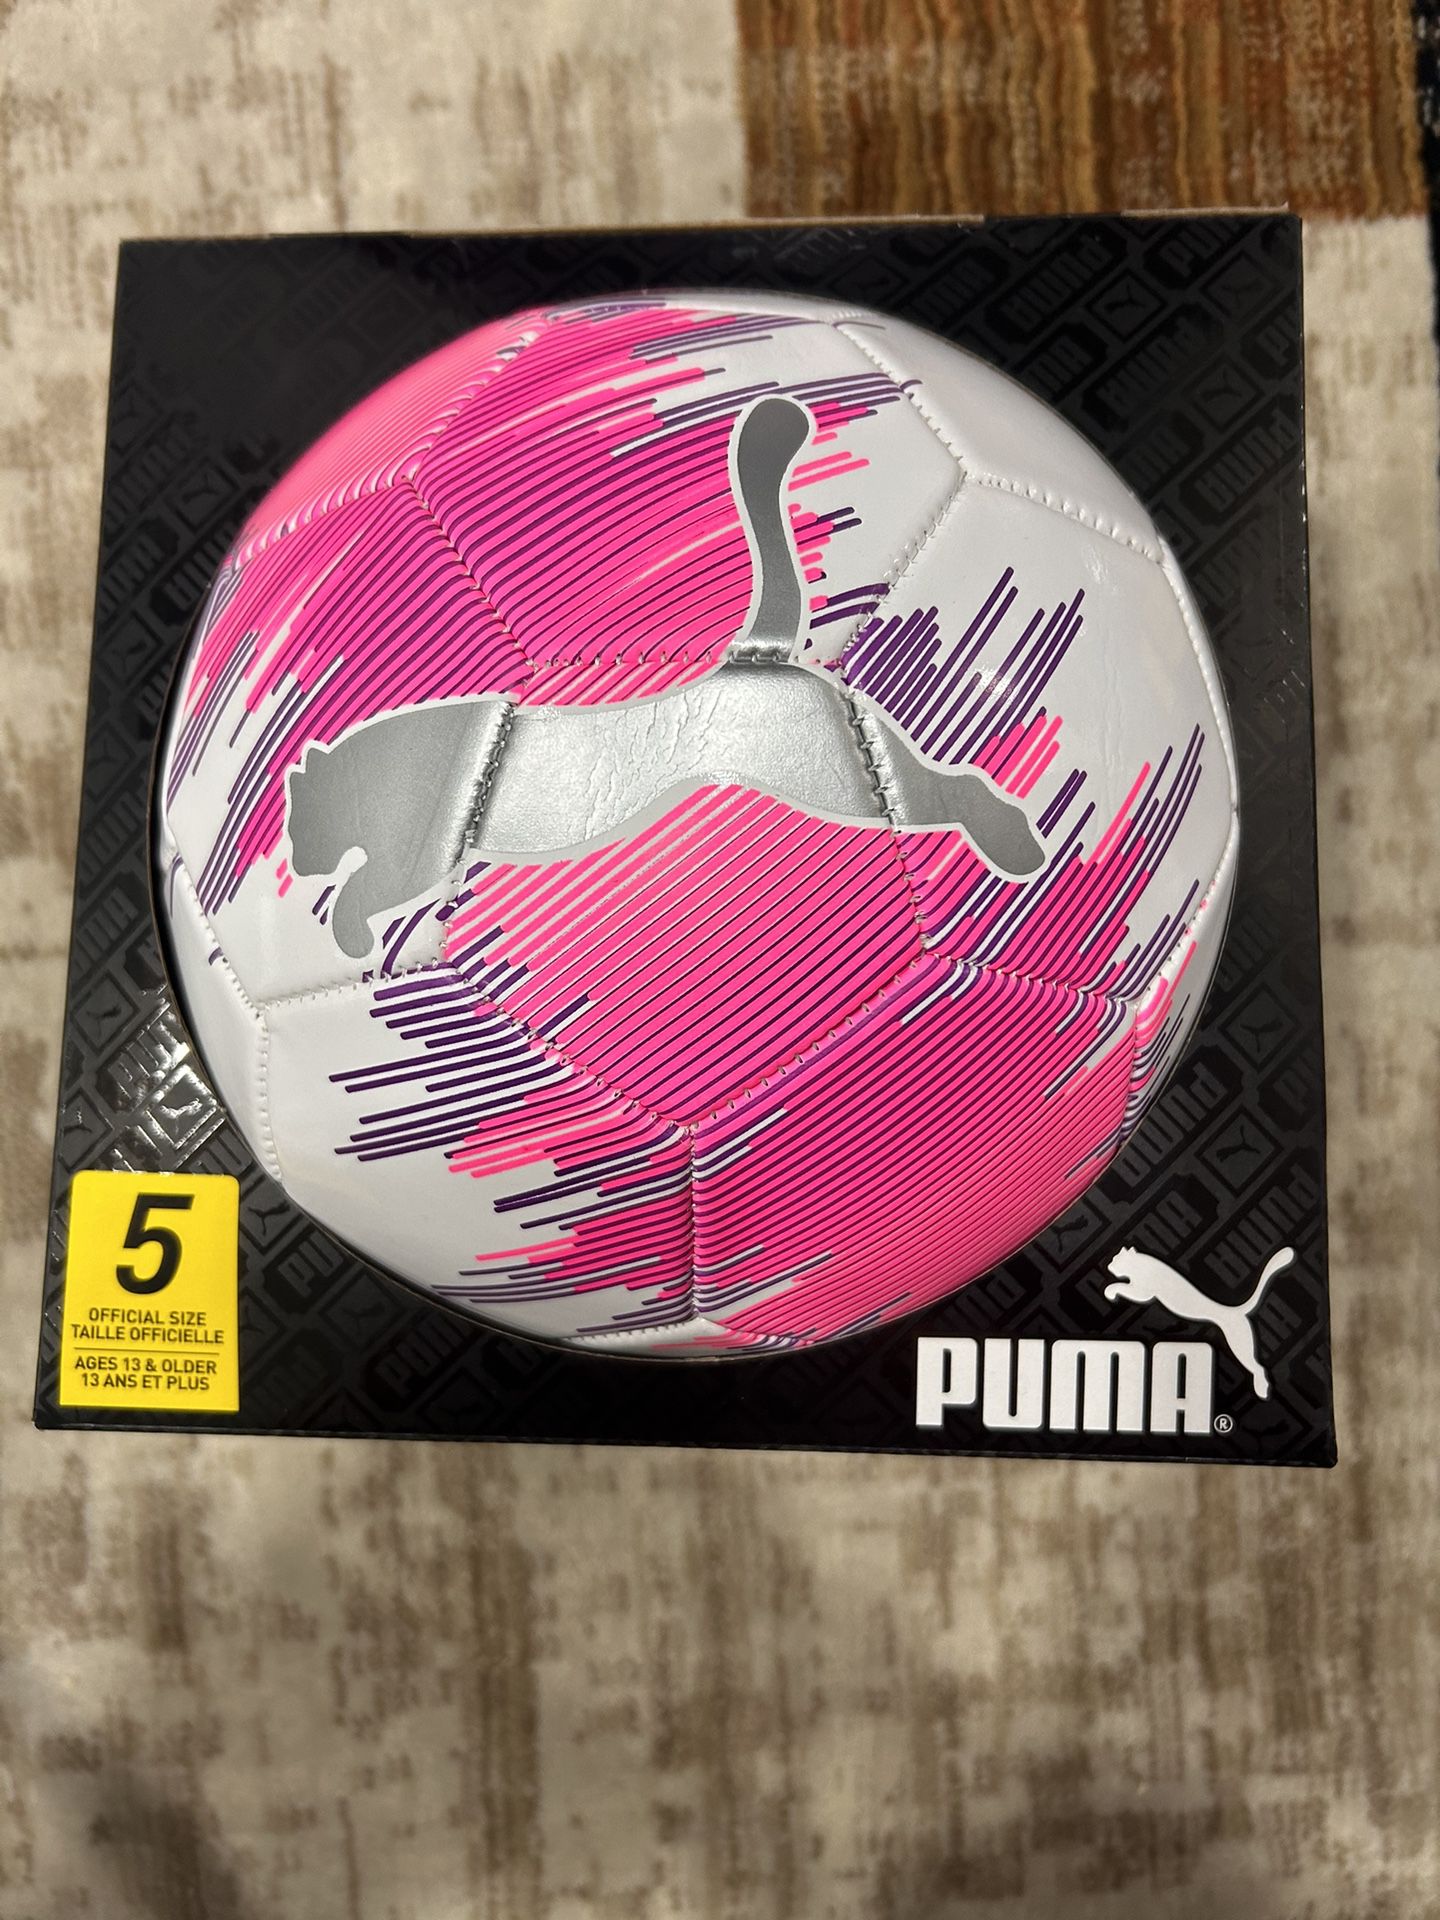 Soccer ball Puma Size 5